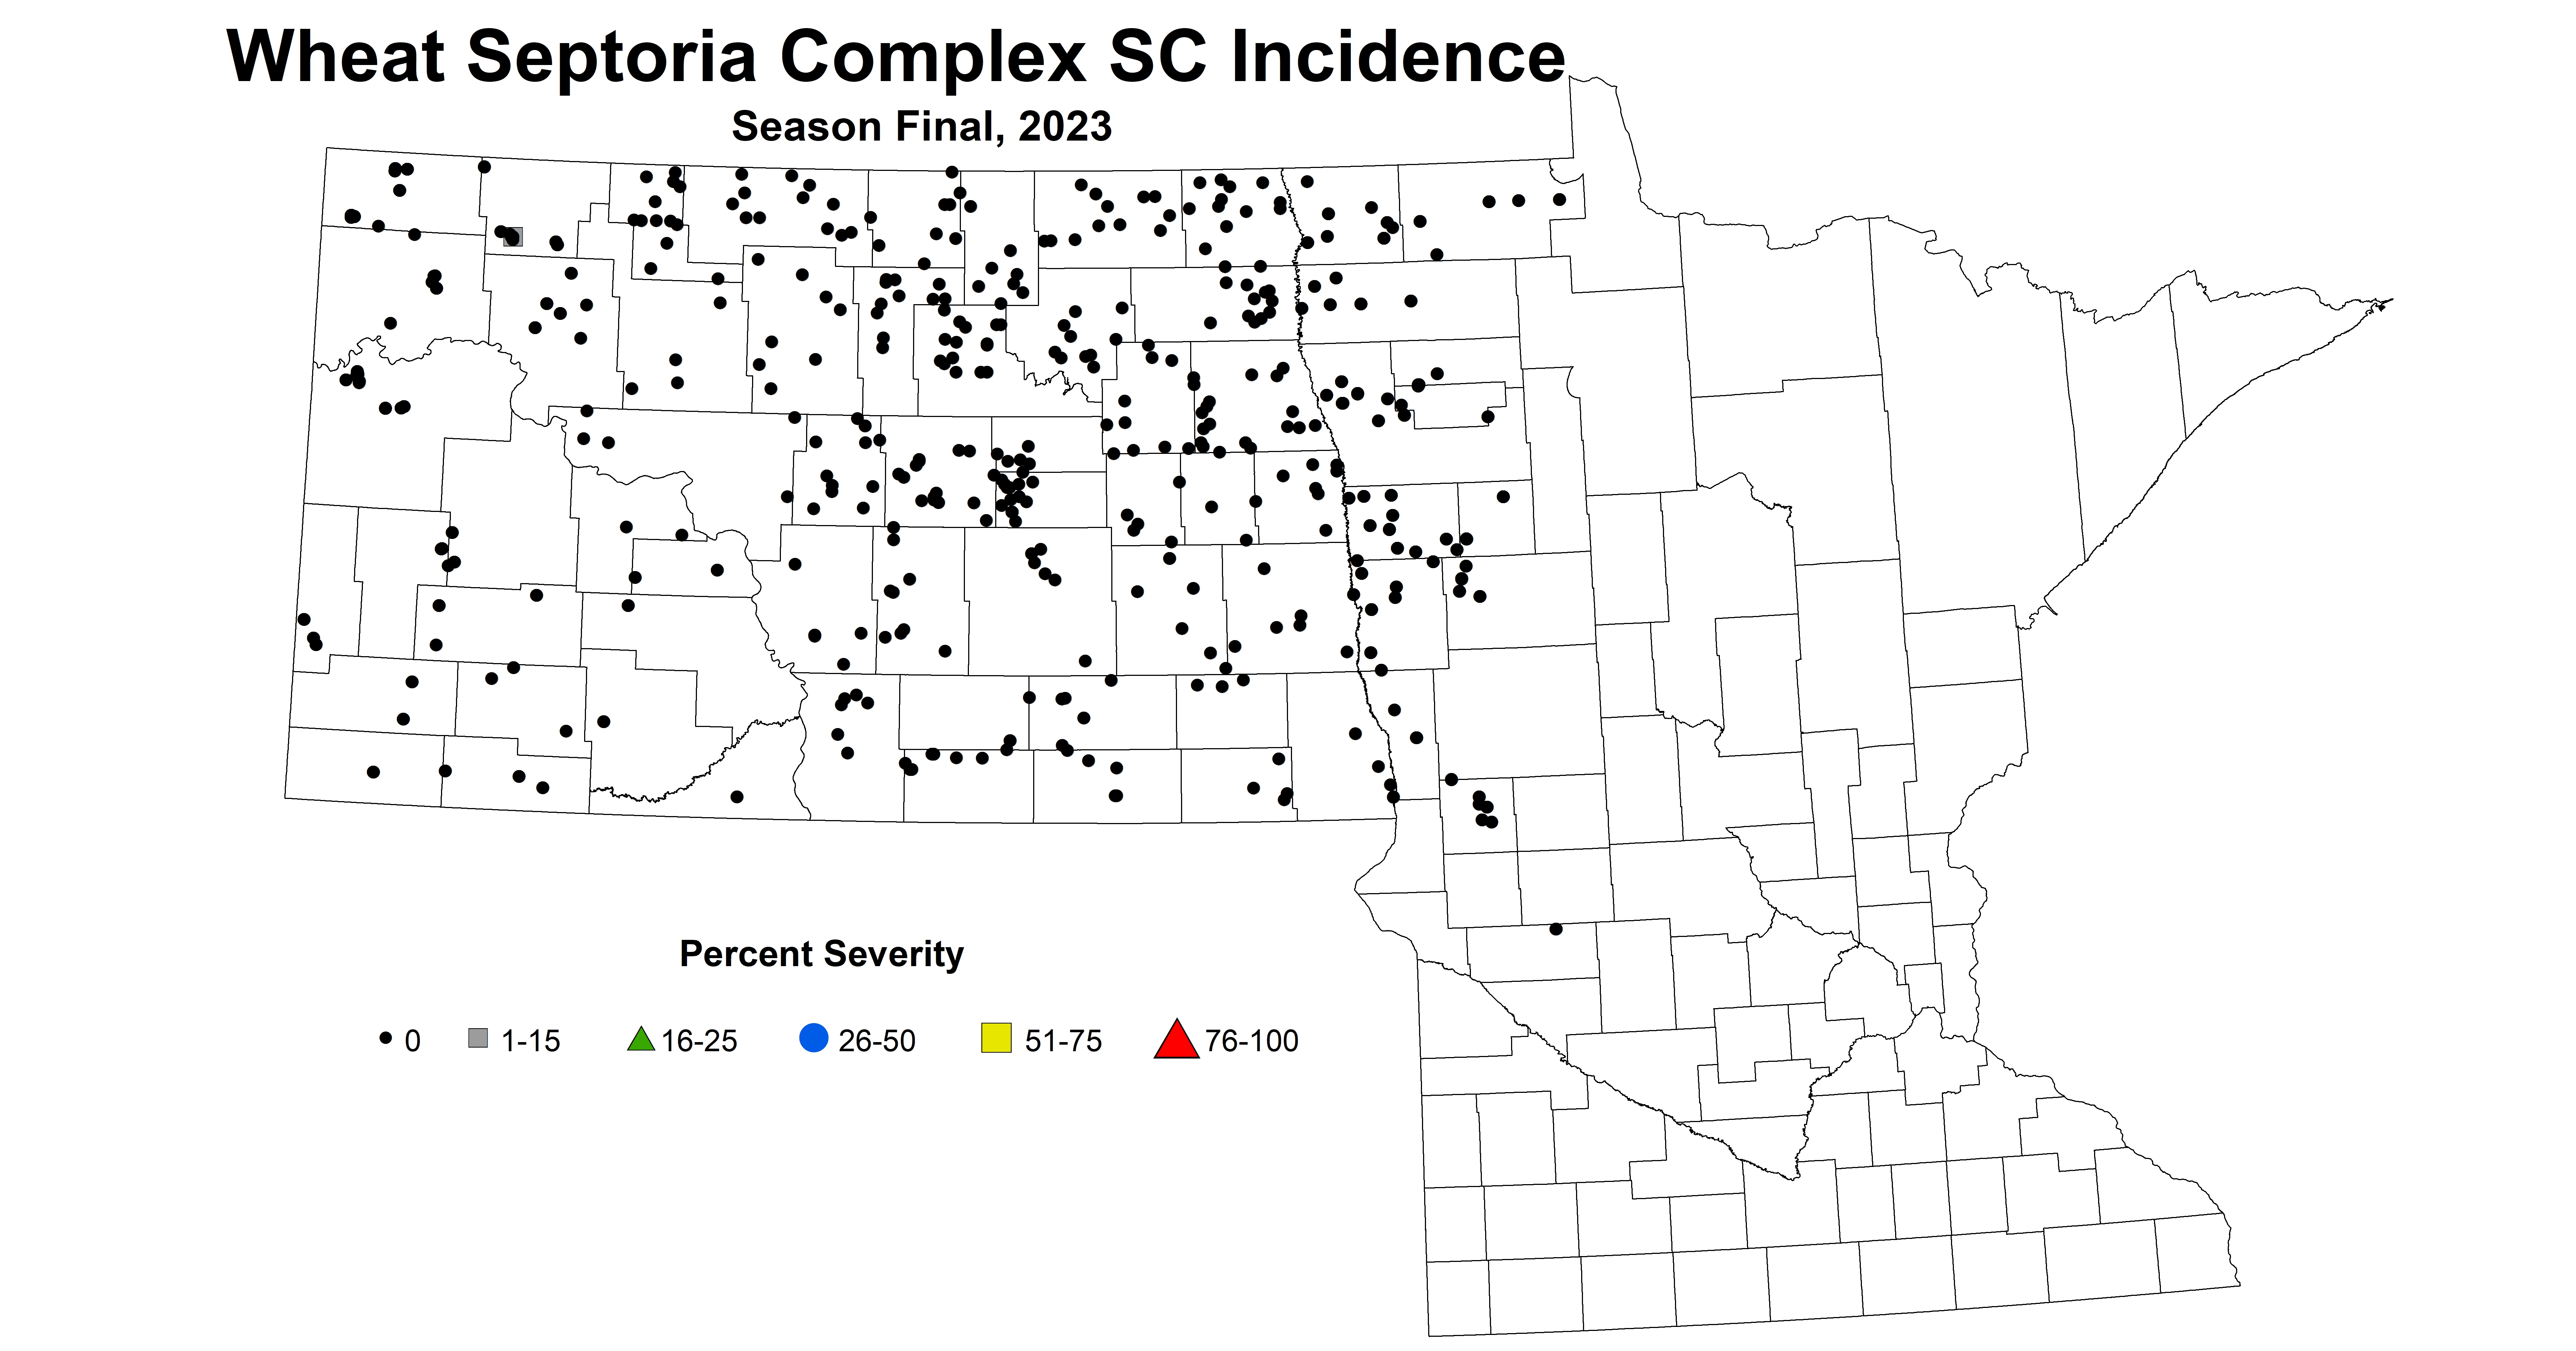 wheat septoria complex sc incidence season final 2023